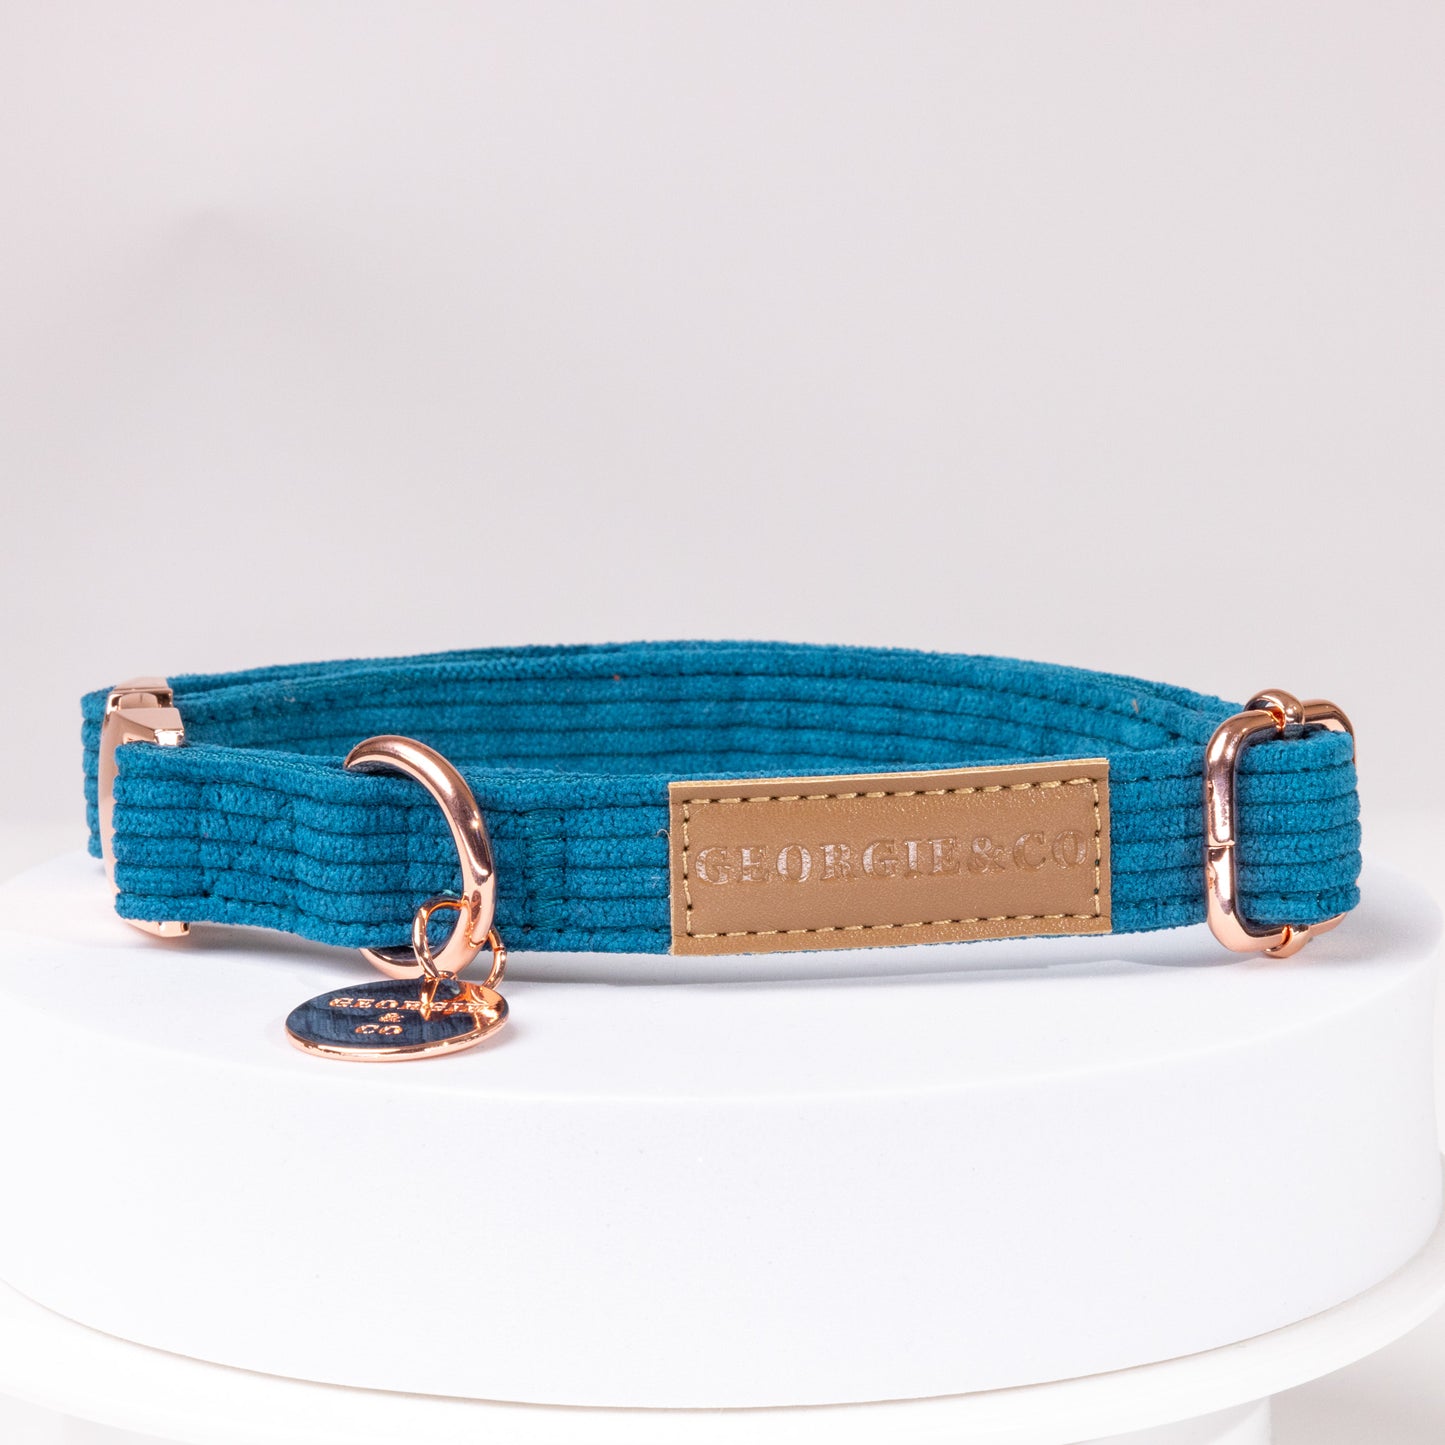 Barkley Luxury Blue Corduroy Personalised Harness Set